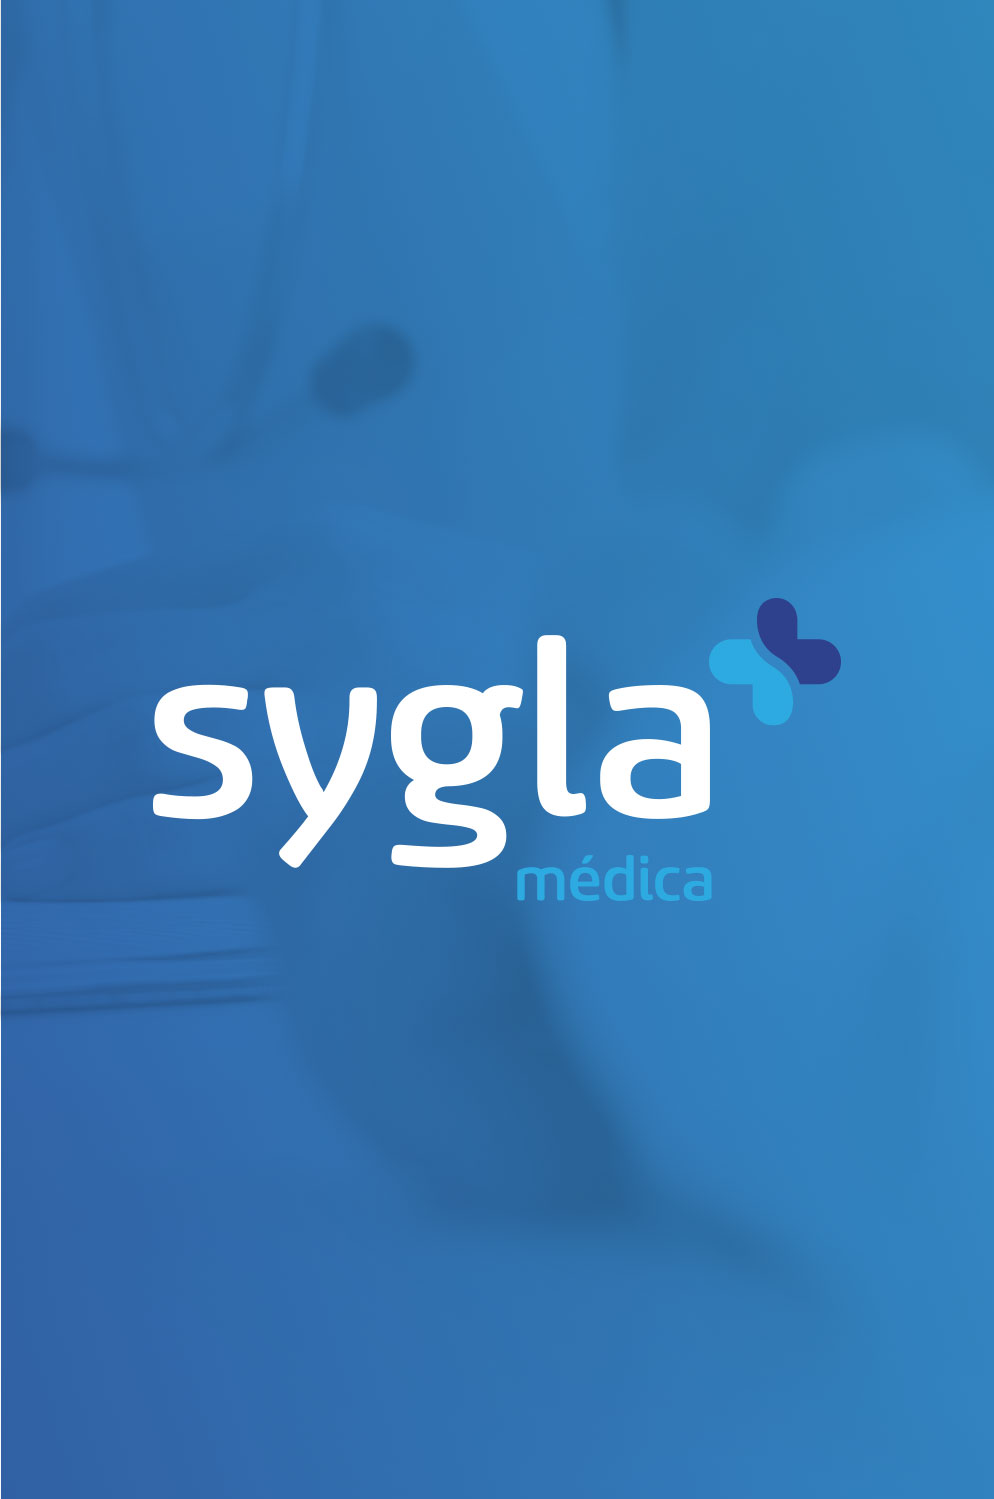 sygla-press8-logo3